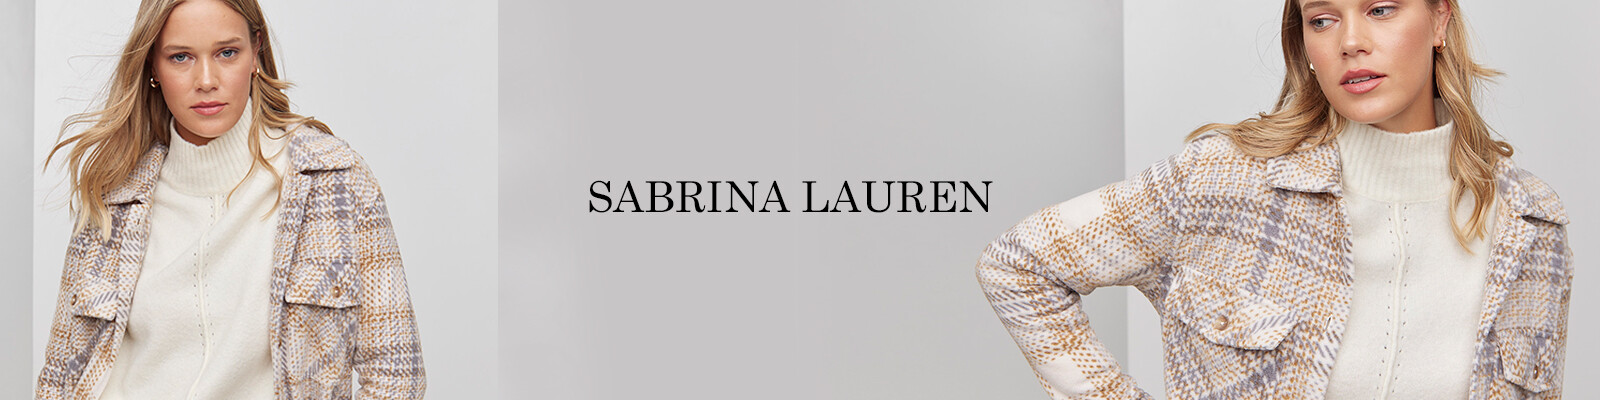 Sabrina Lauren